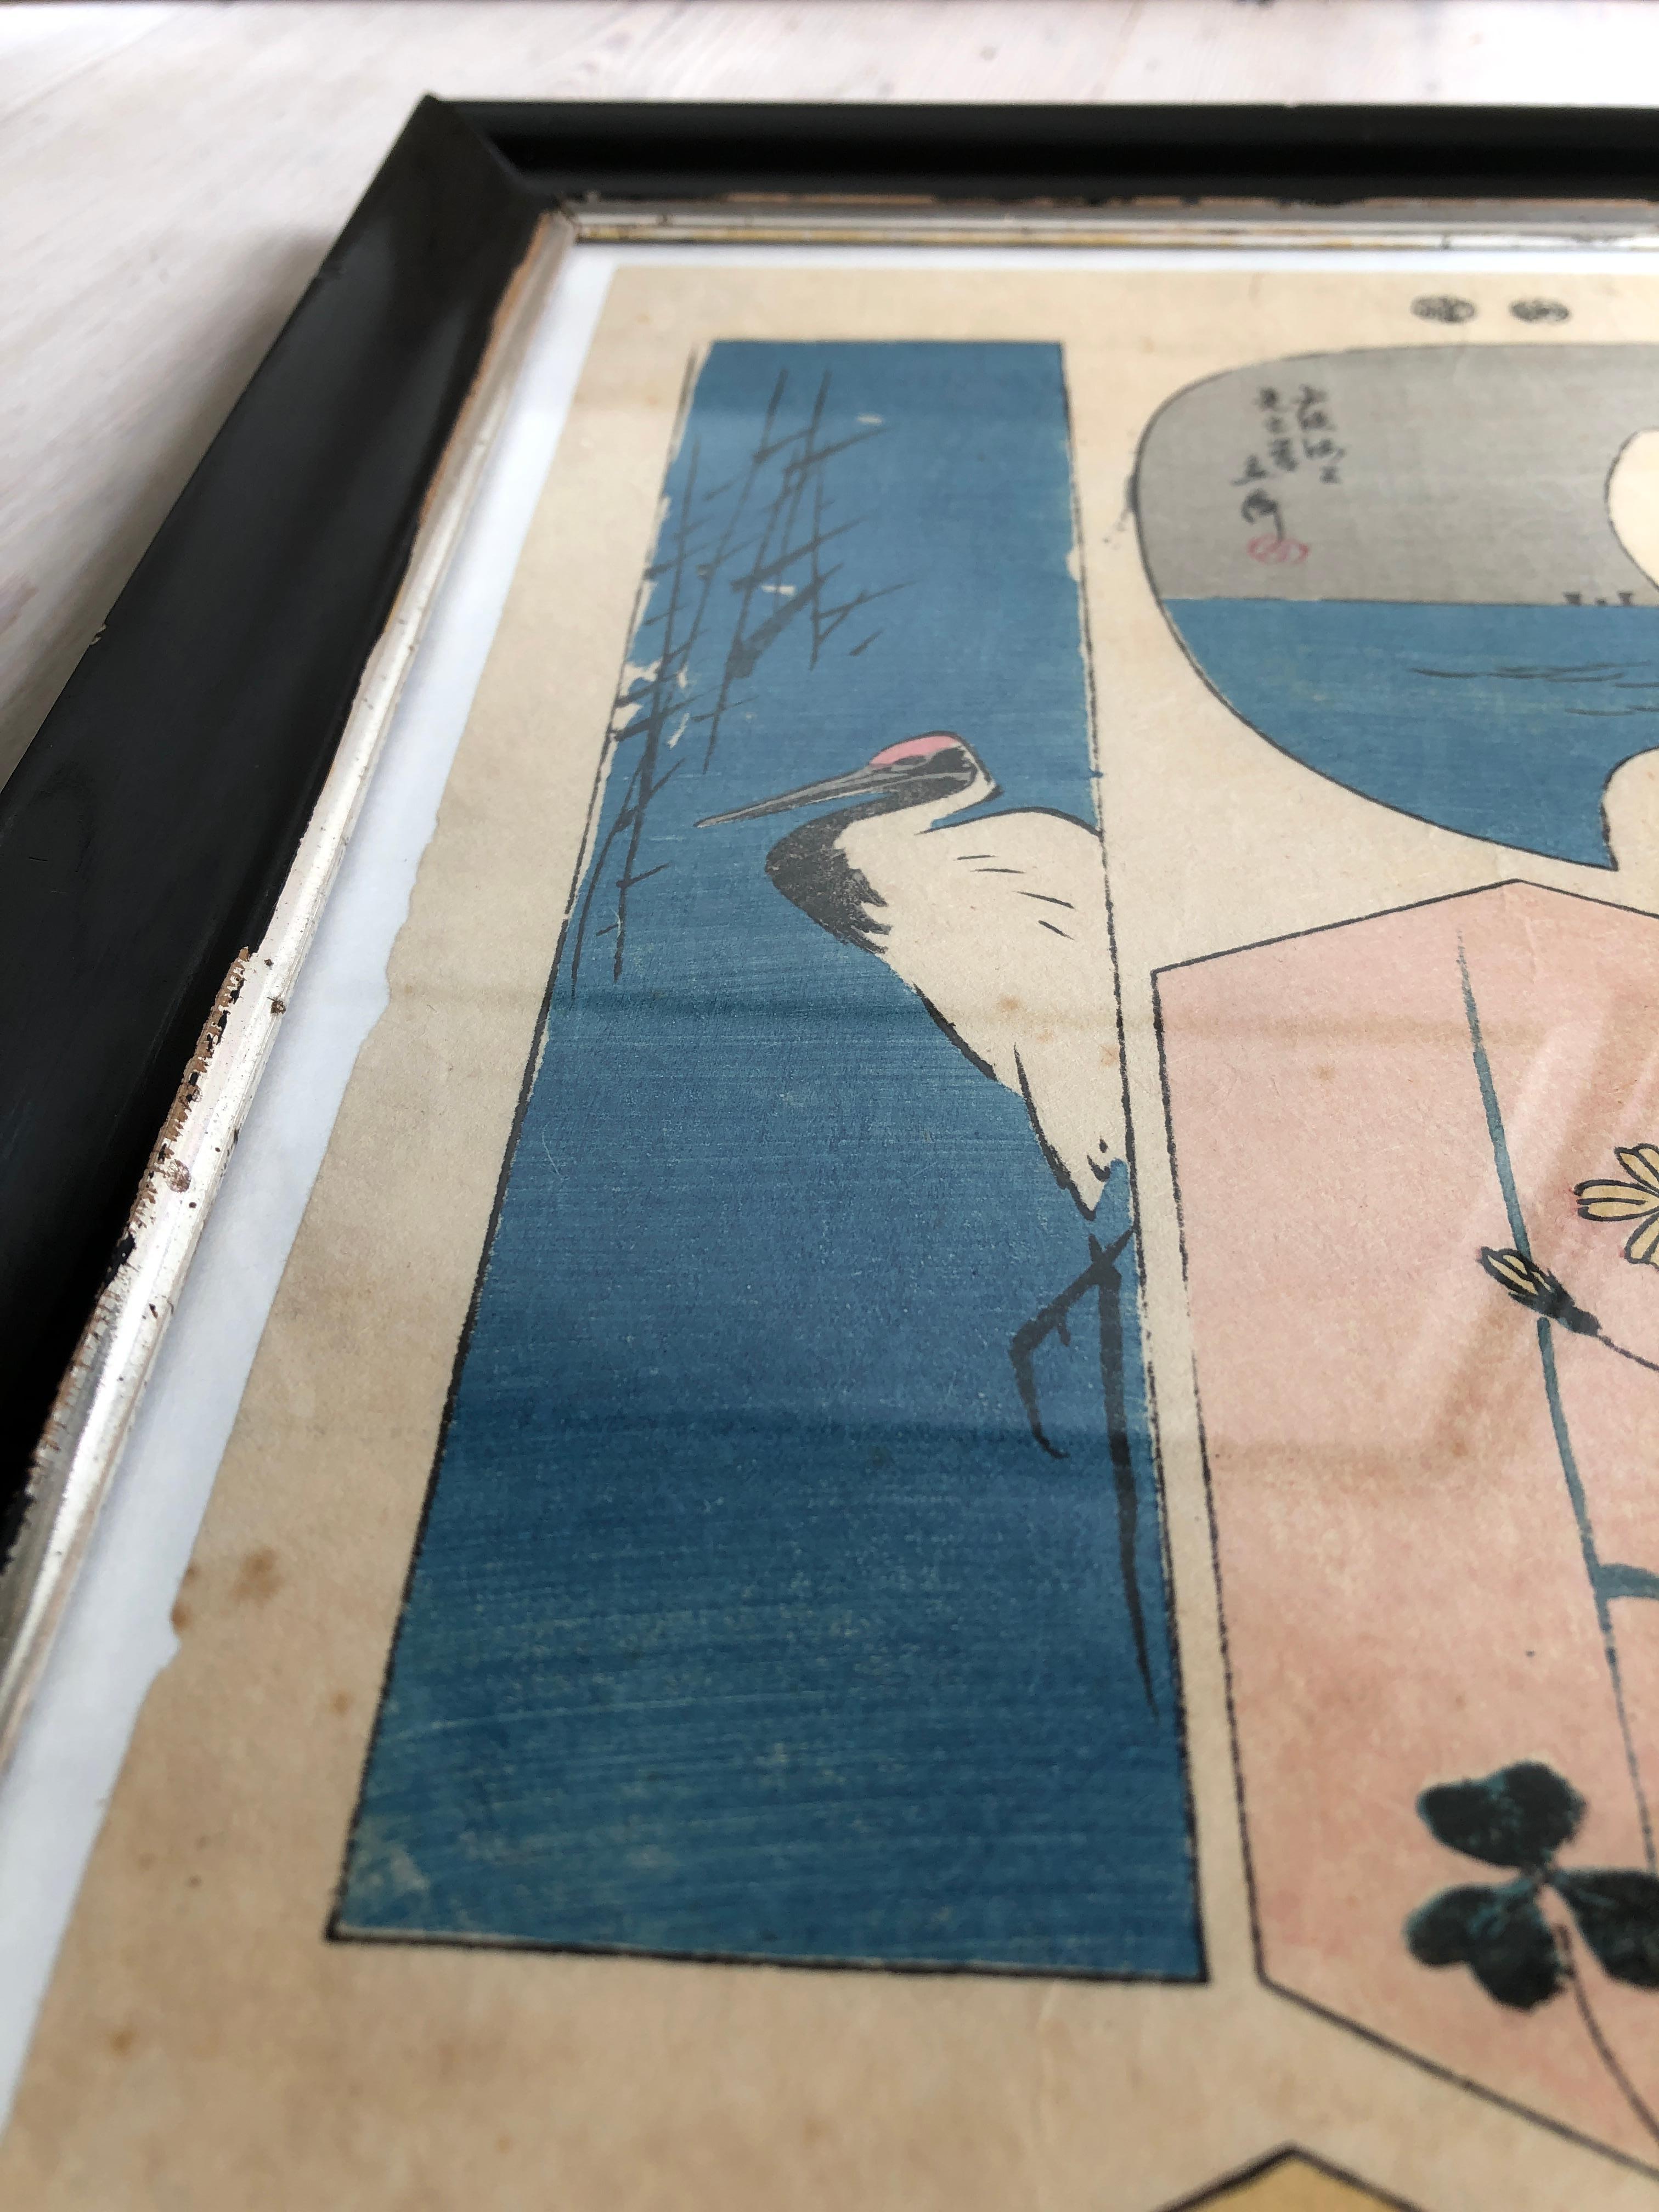 Paper Antique Utagawa Hiroshige Woodblock Print in Antique Frame, Japan, 19th Century